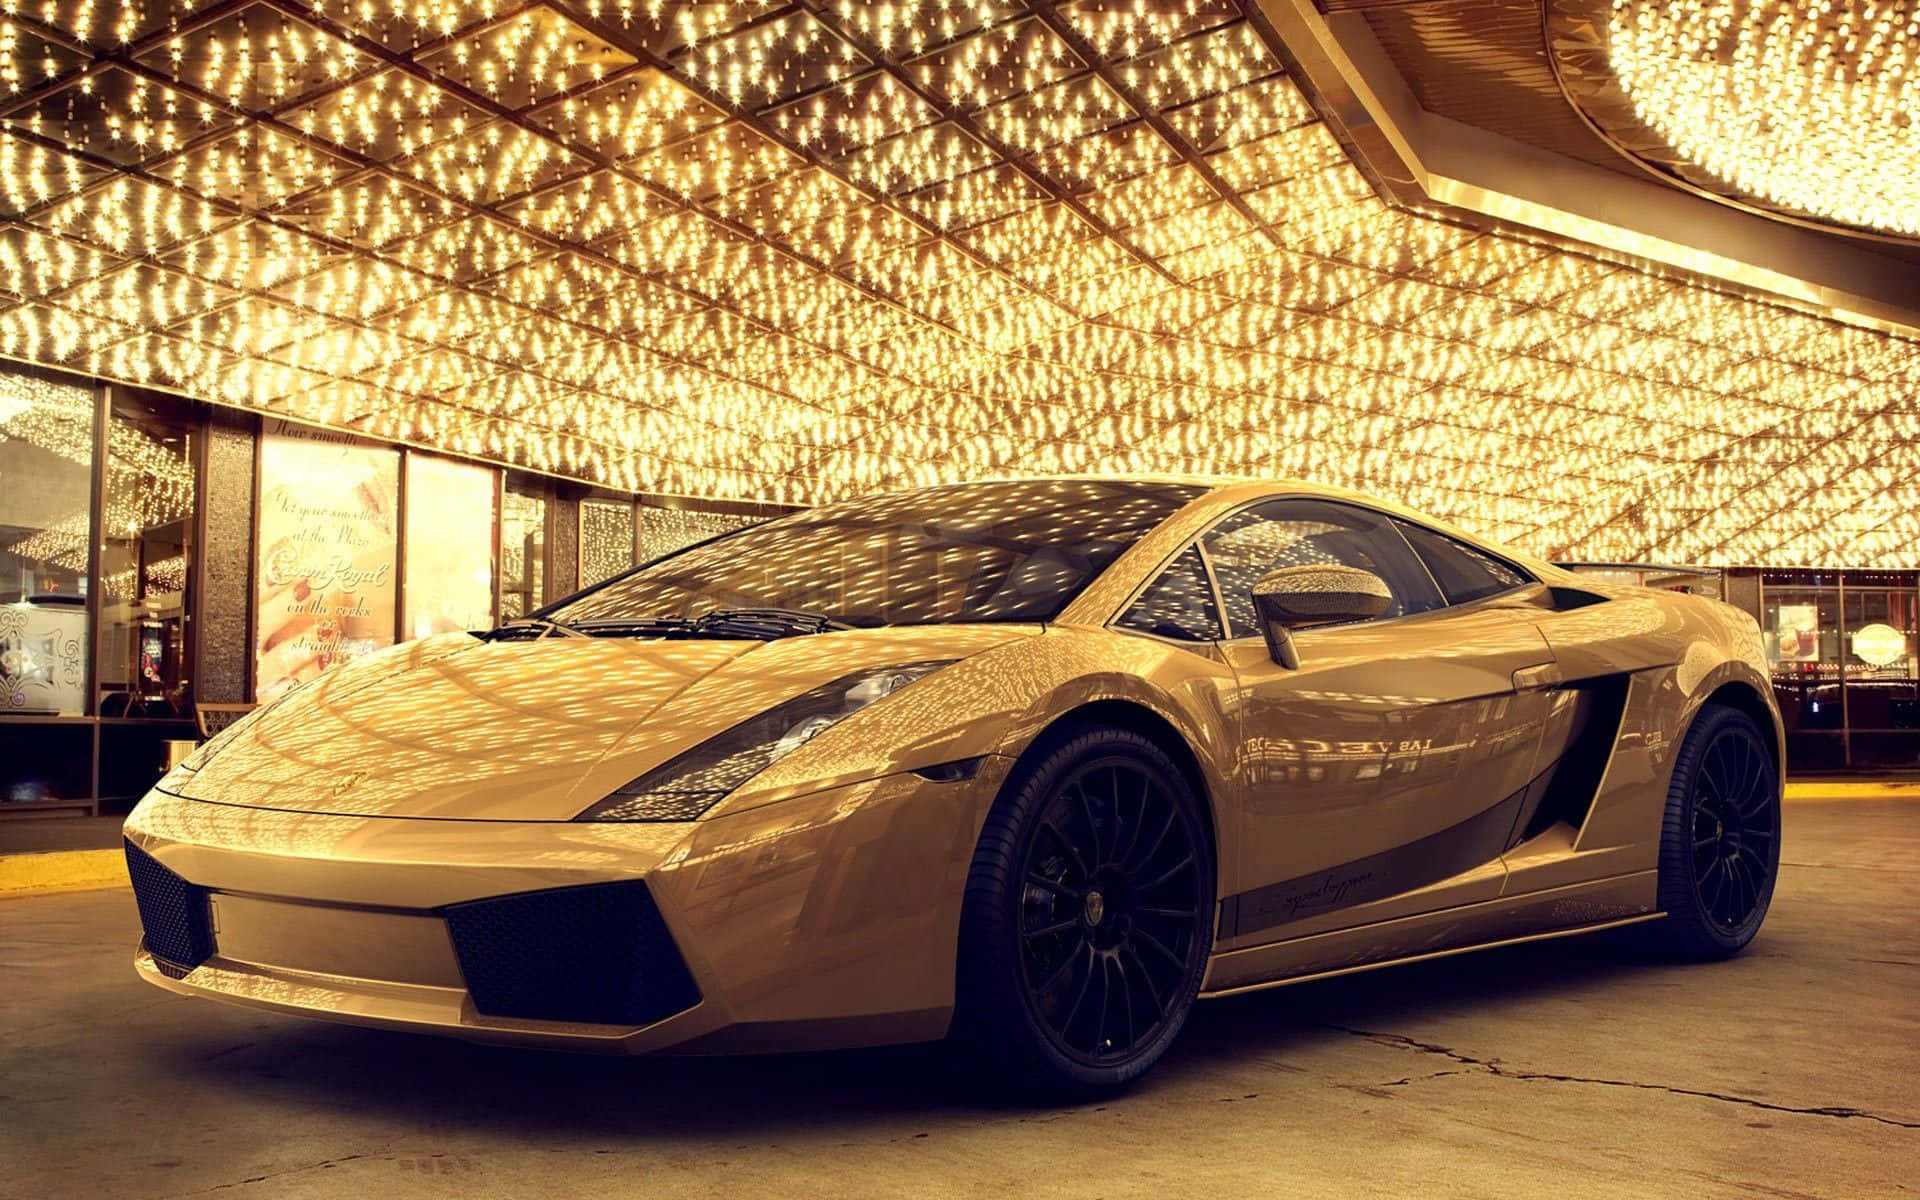 Uppleven Touch Av Lyx Med Denna Guldiga Lamborghini Som Bakgrundsbild Till Din Dator Eller Mobiltelefon. Wallpaper